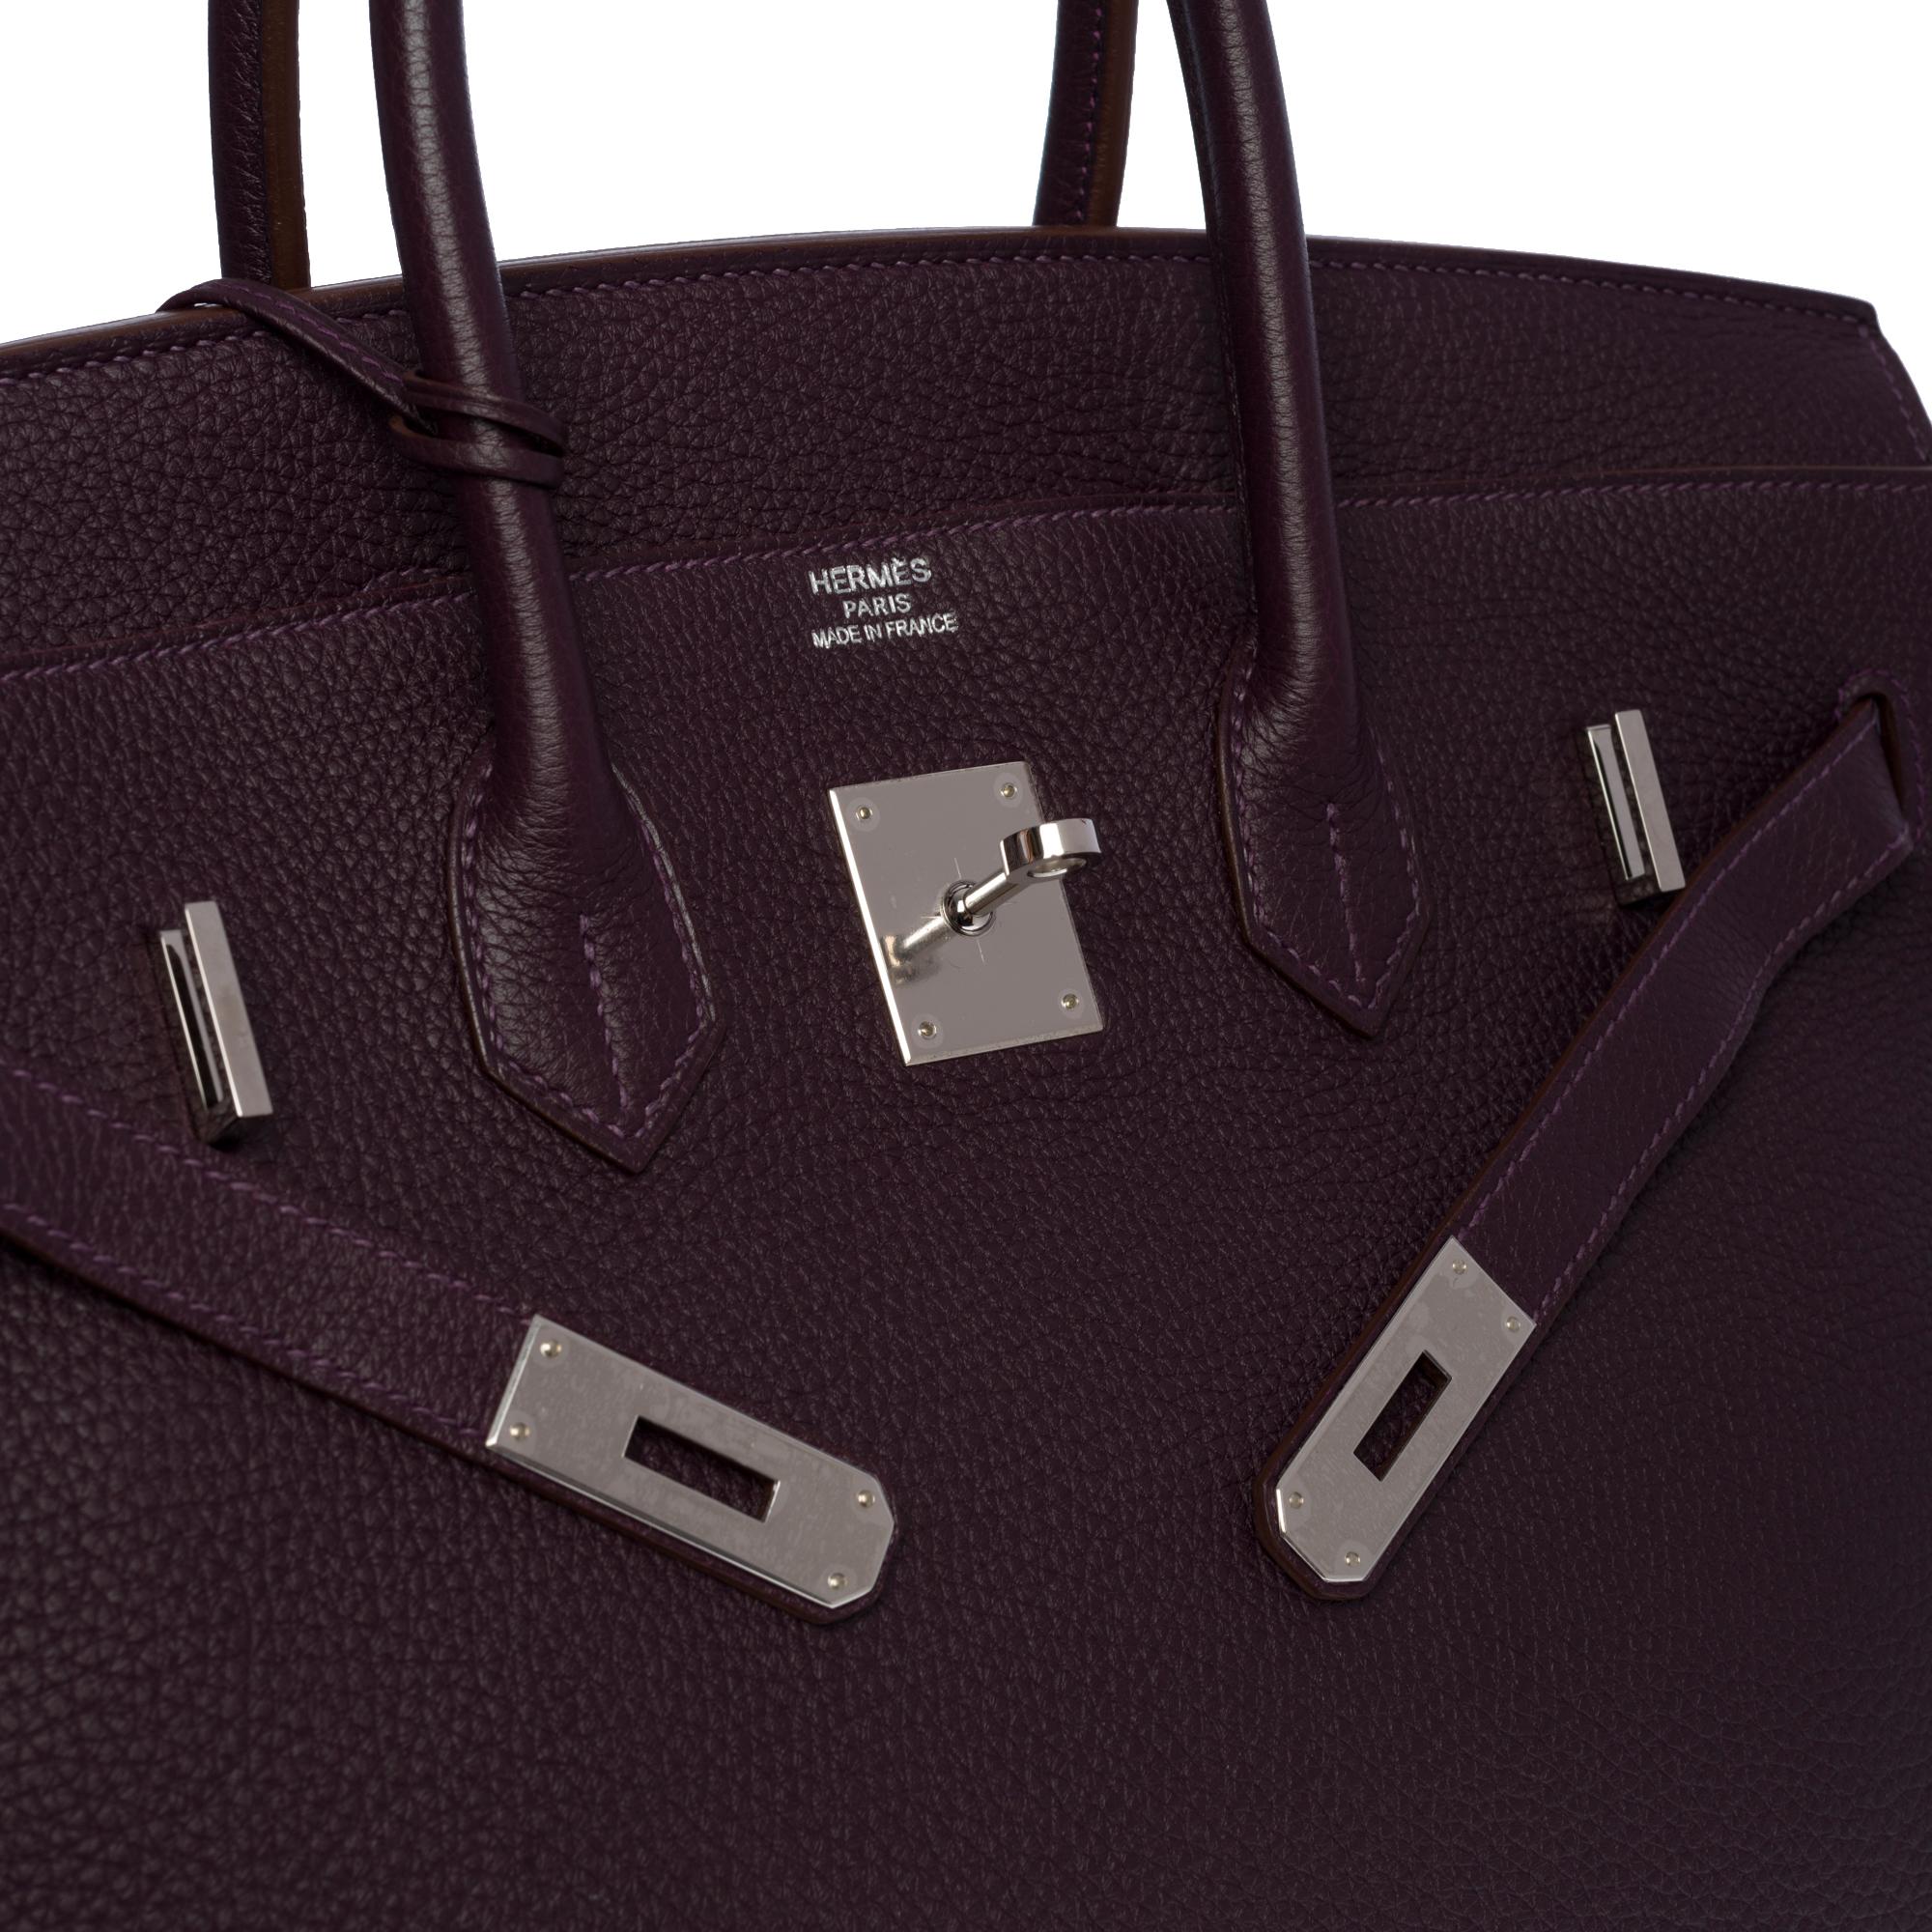 Women's or Men's Amazing Hermès Birkin 35 handbag in raisin Togo leather, SHW